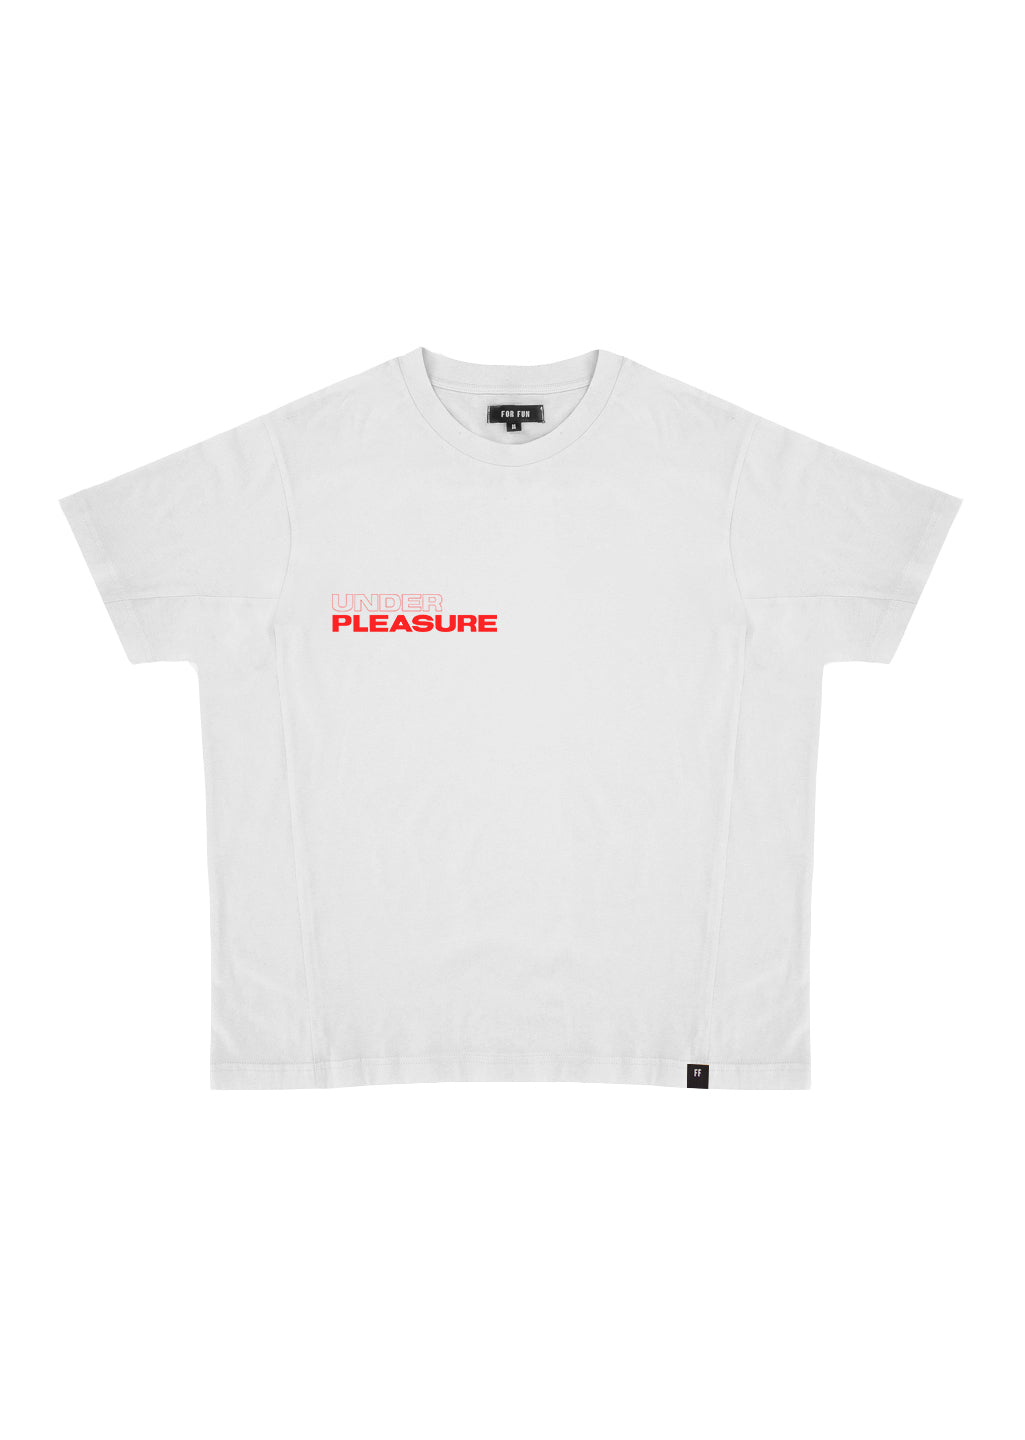 Under Pleasure / Oversize T-shirt